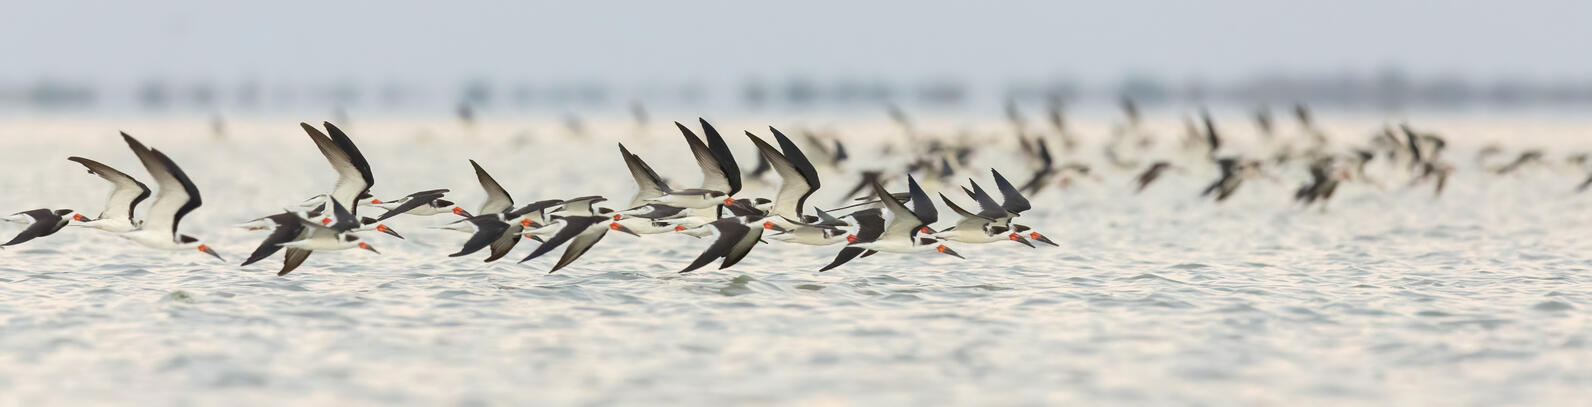 a flock of Black Skimmers in flight